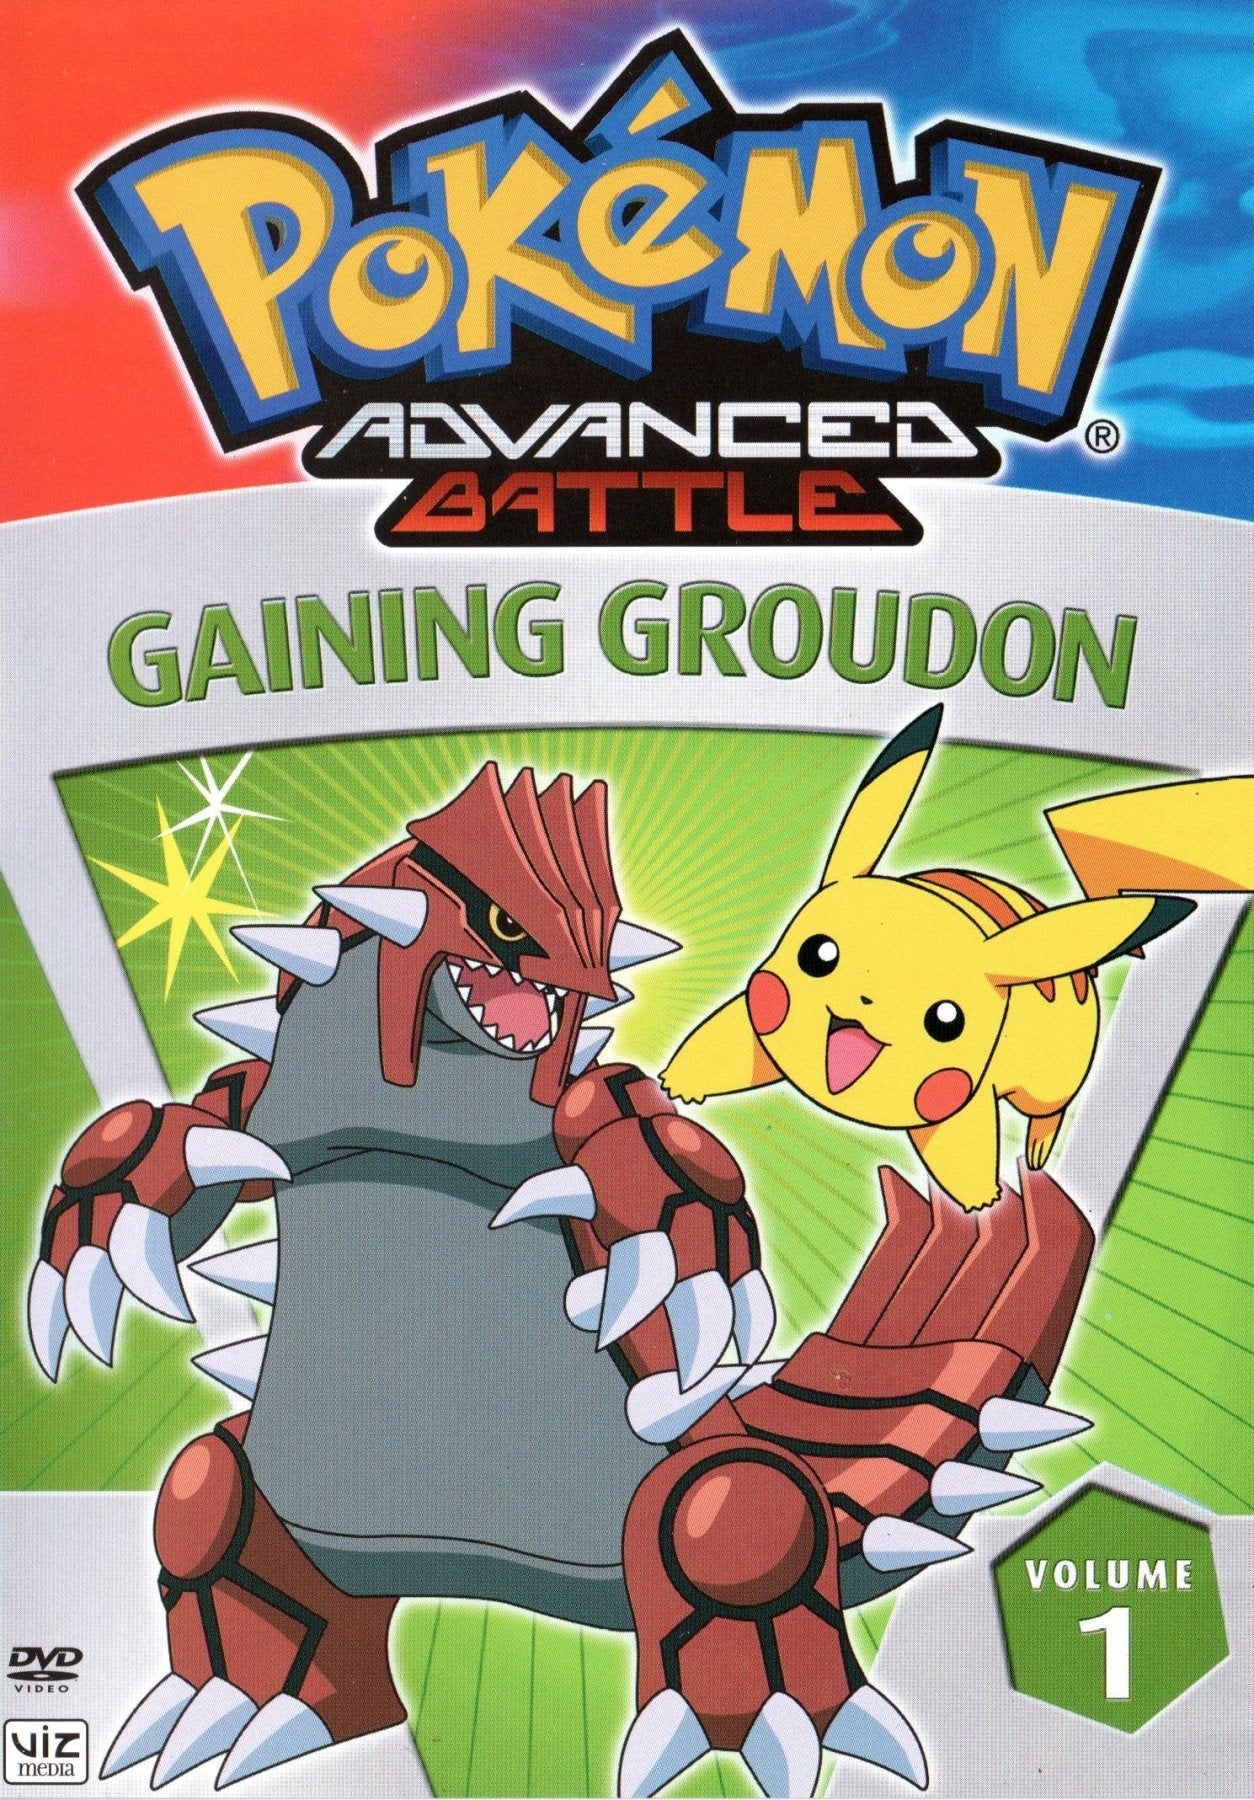 Pokemon Advanced Battle Volume 1: Gaining Groudon - DVD - Retro Island Gaming